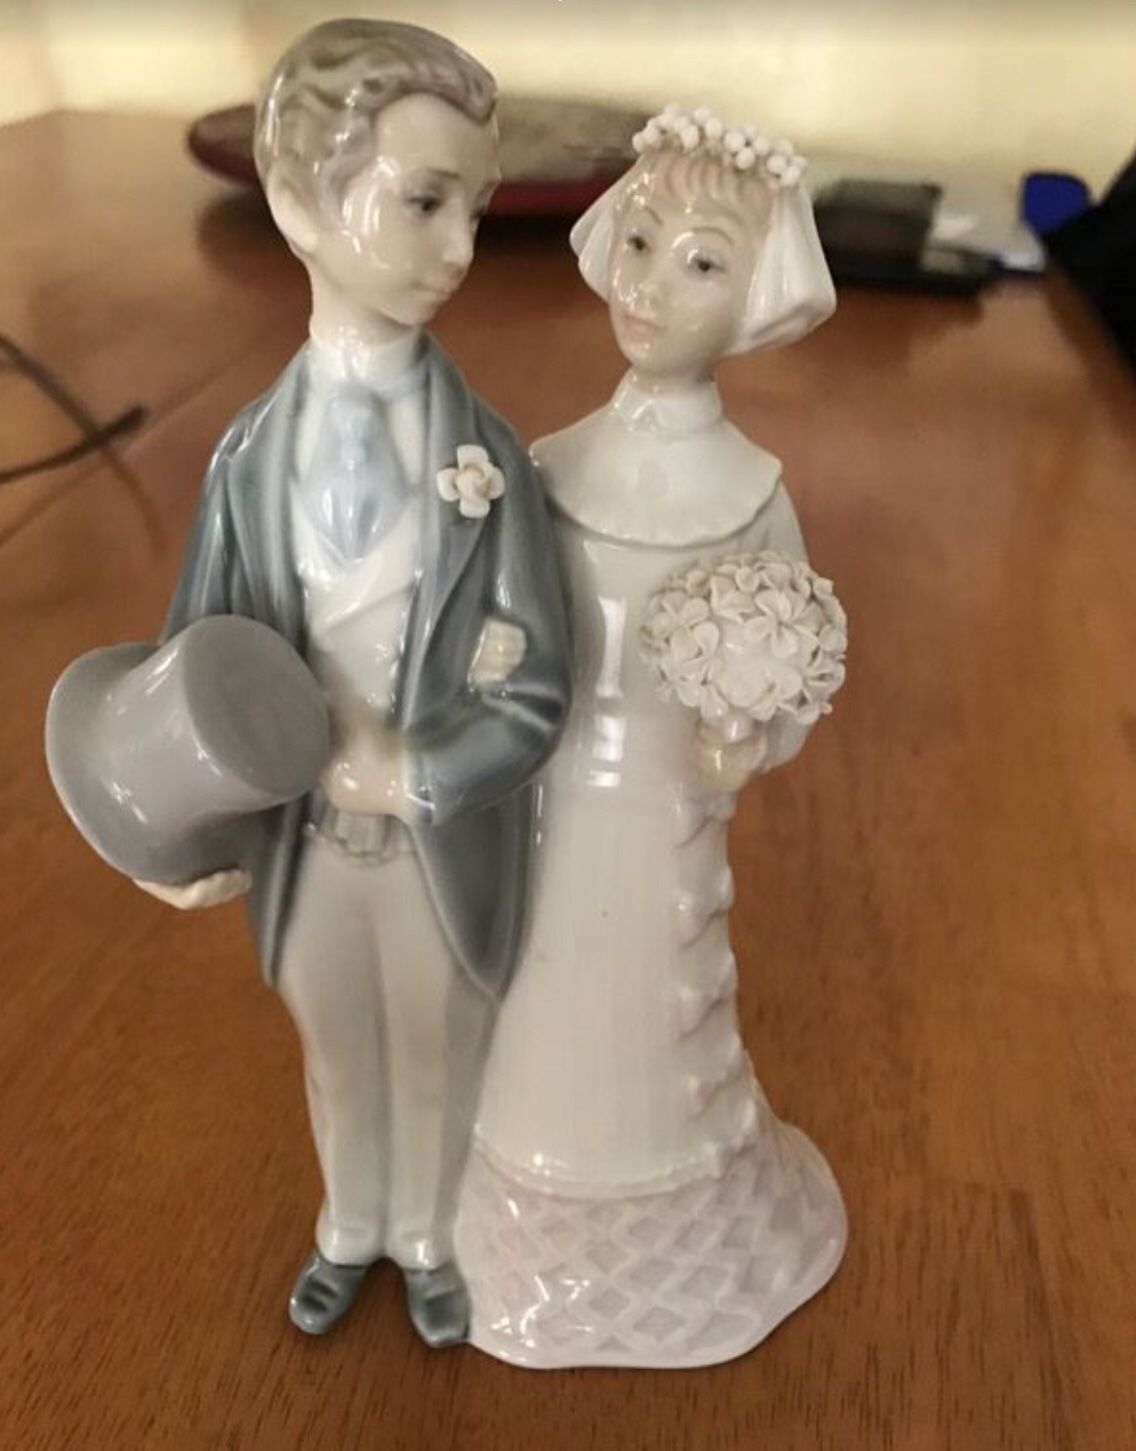 Authentic Lladro figurine- bride and groom